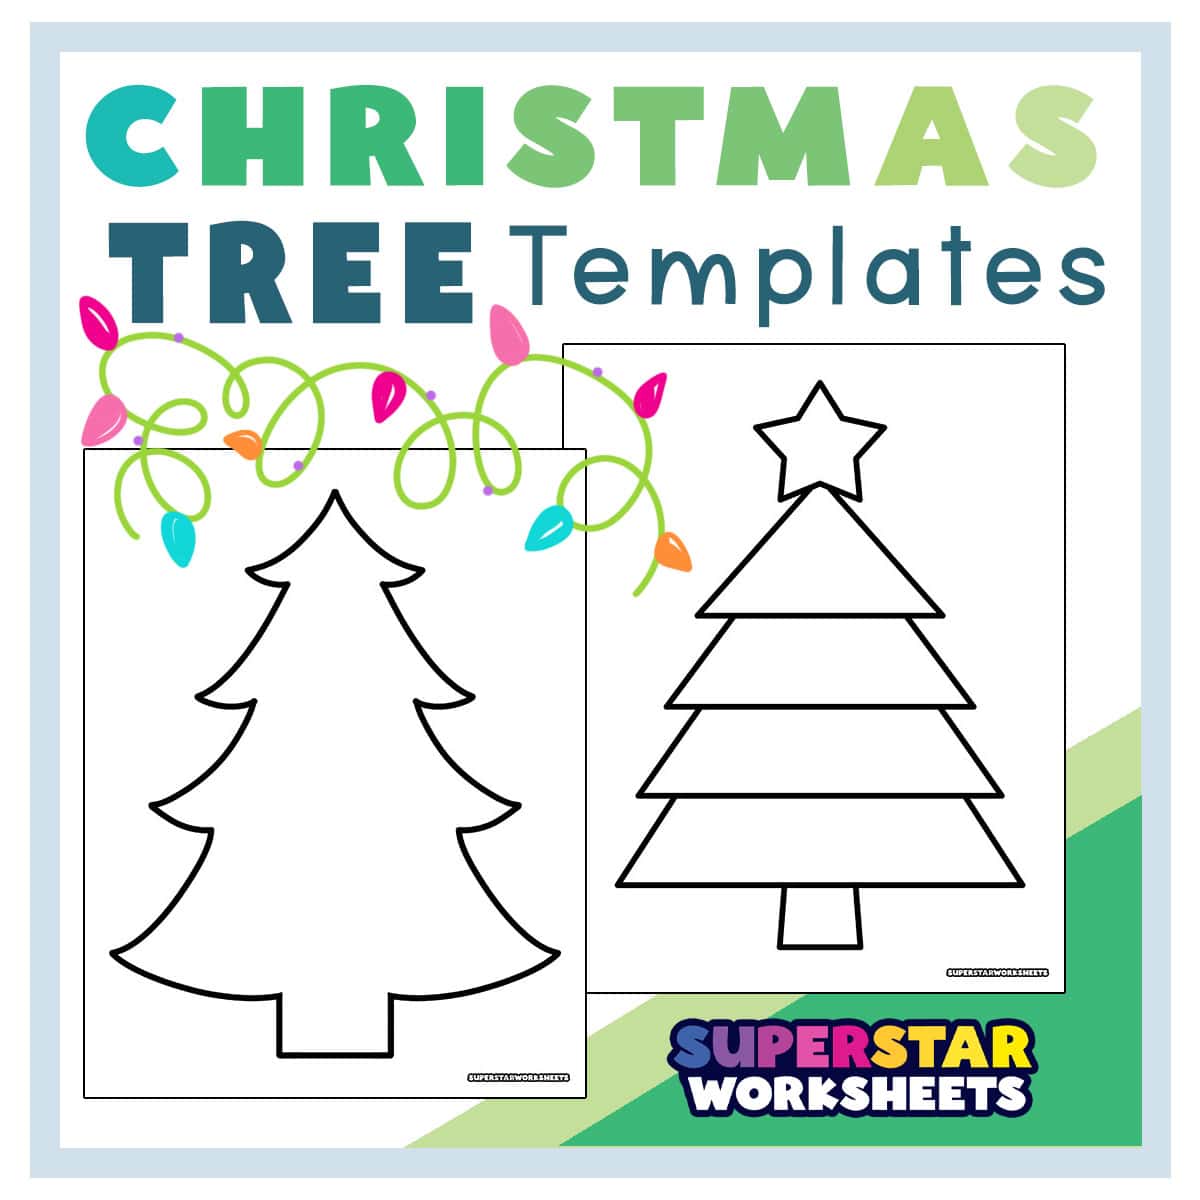 Christmas Tree Template Superstar Worksheets